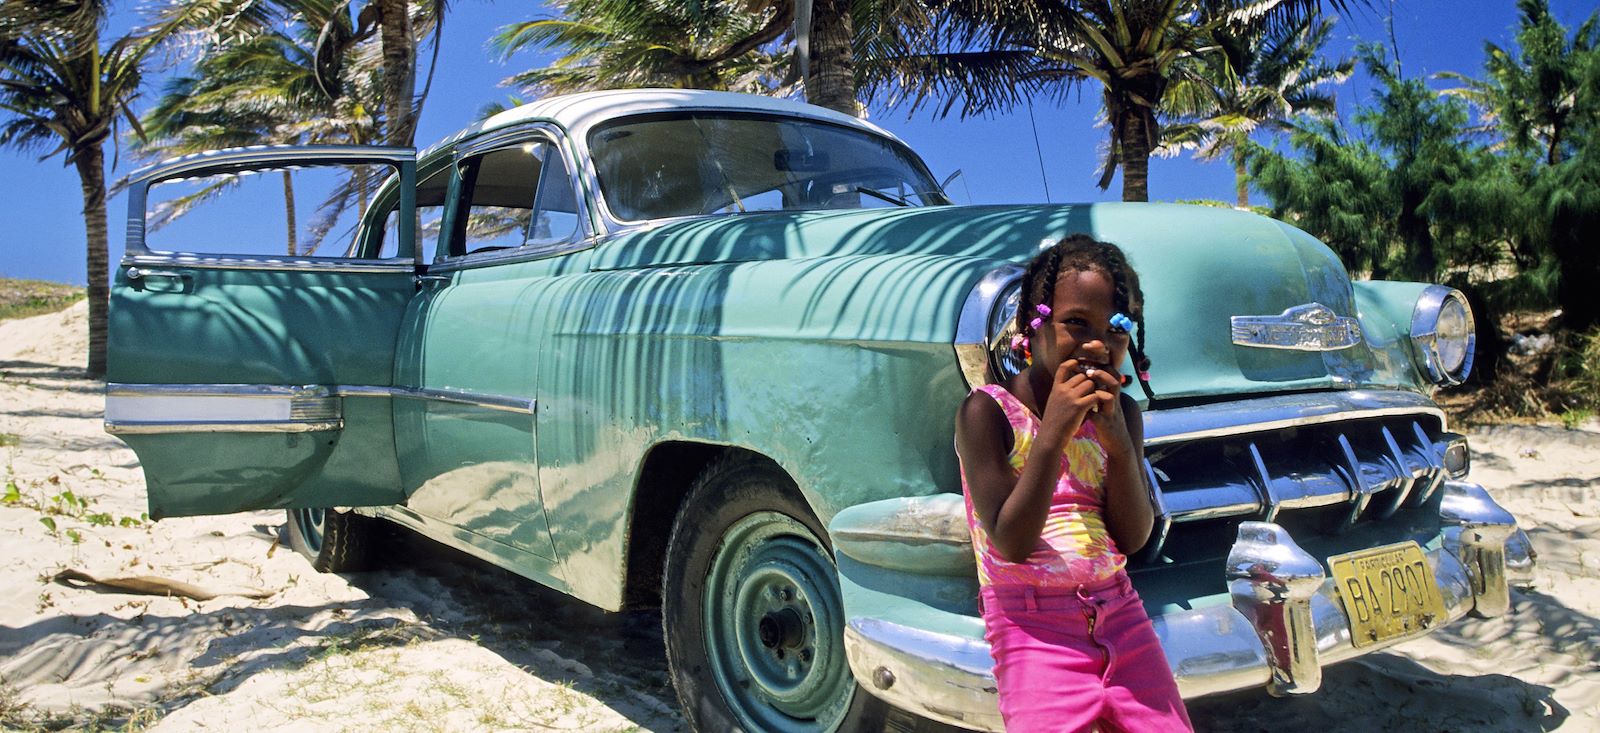 Voyage roadtrip - A Cuba matata !